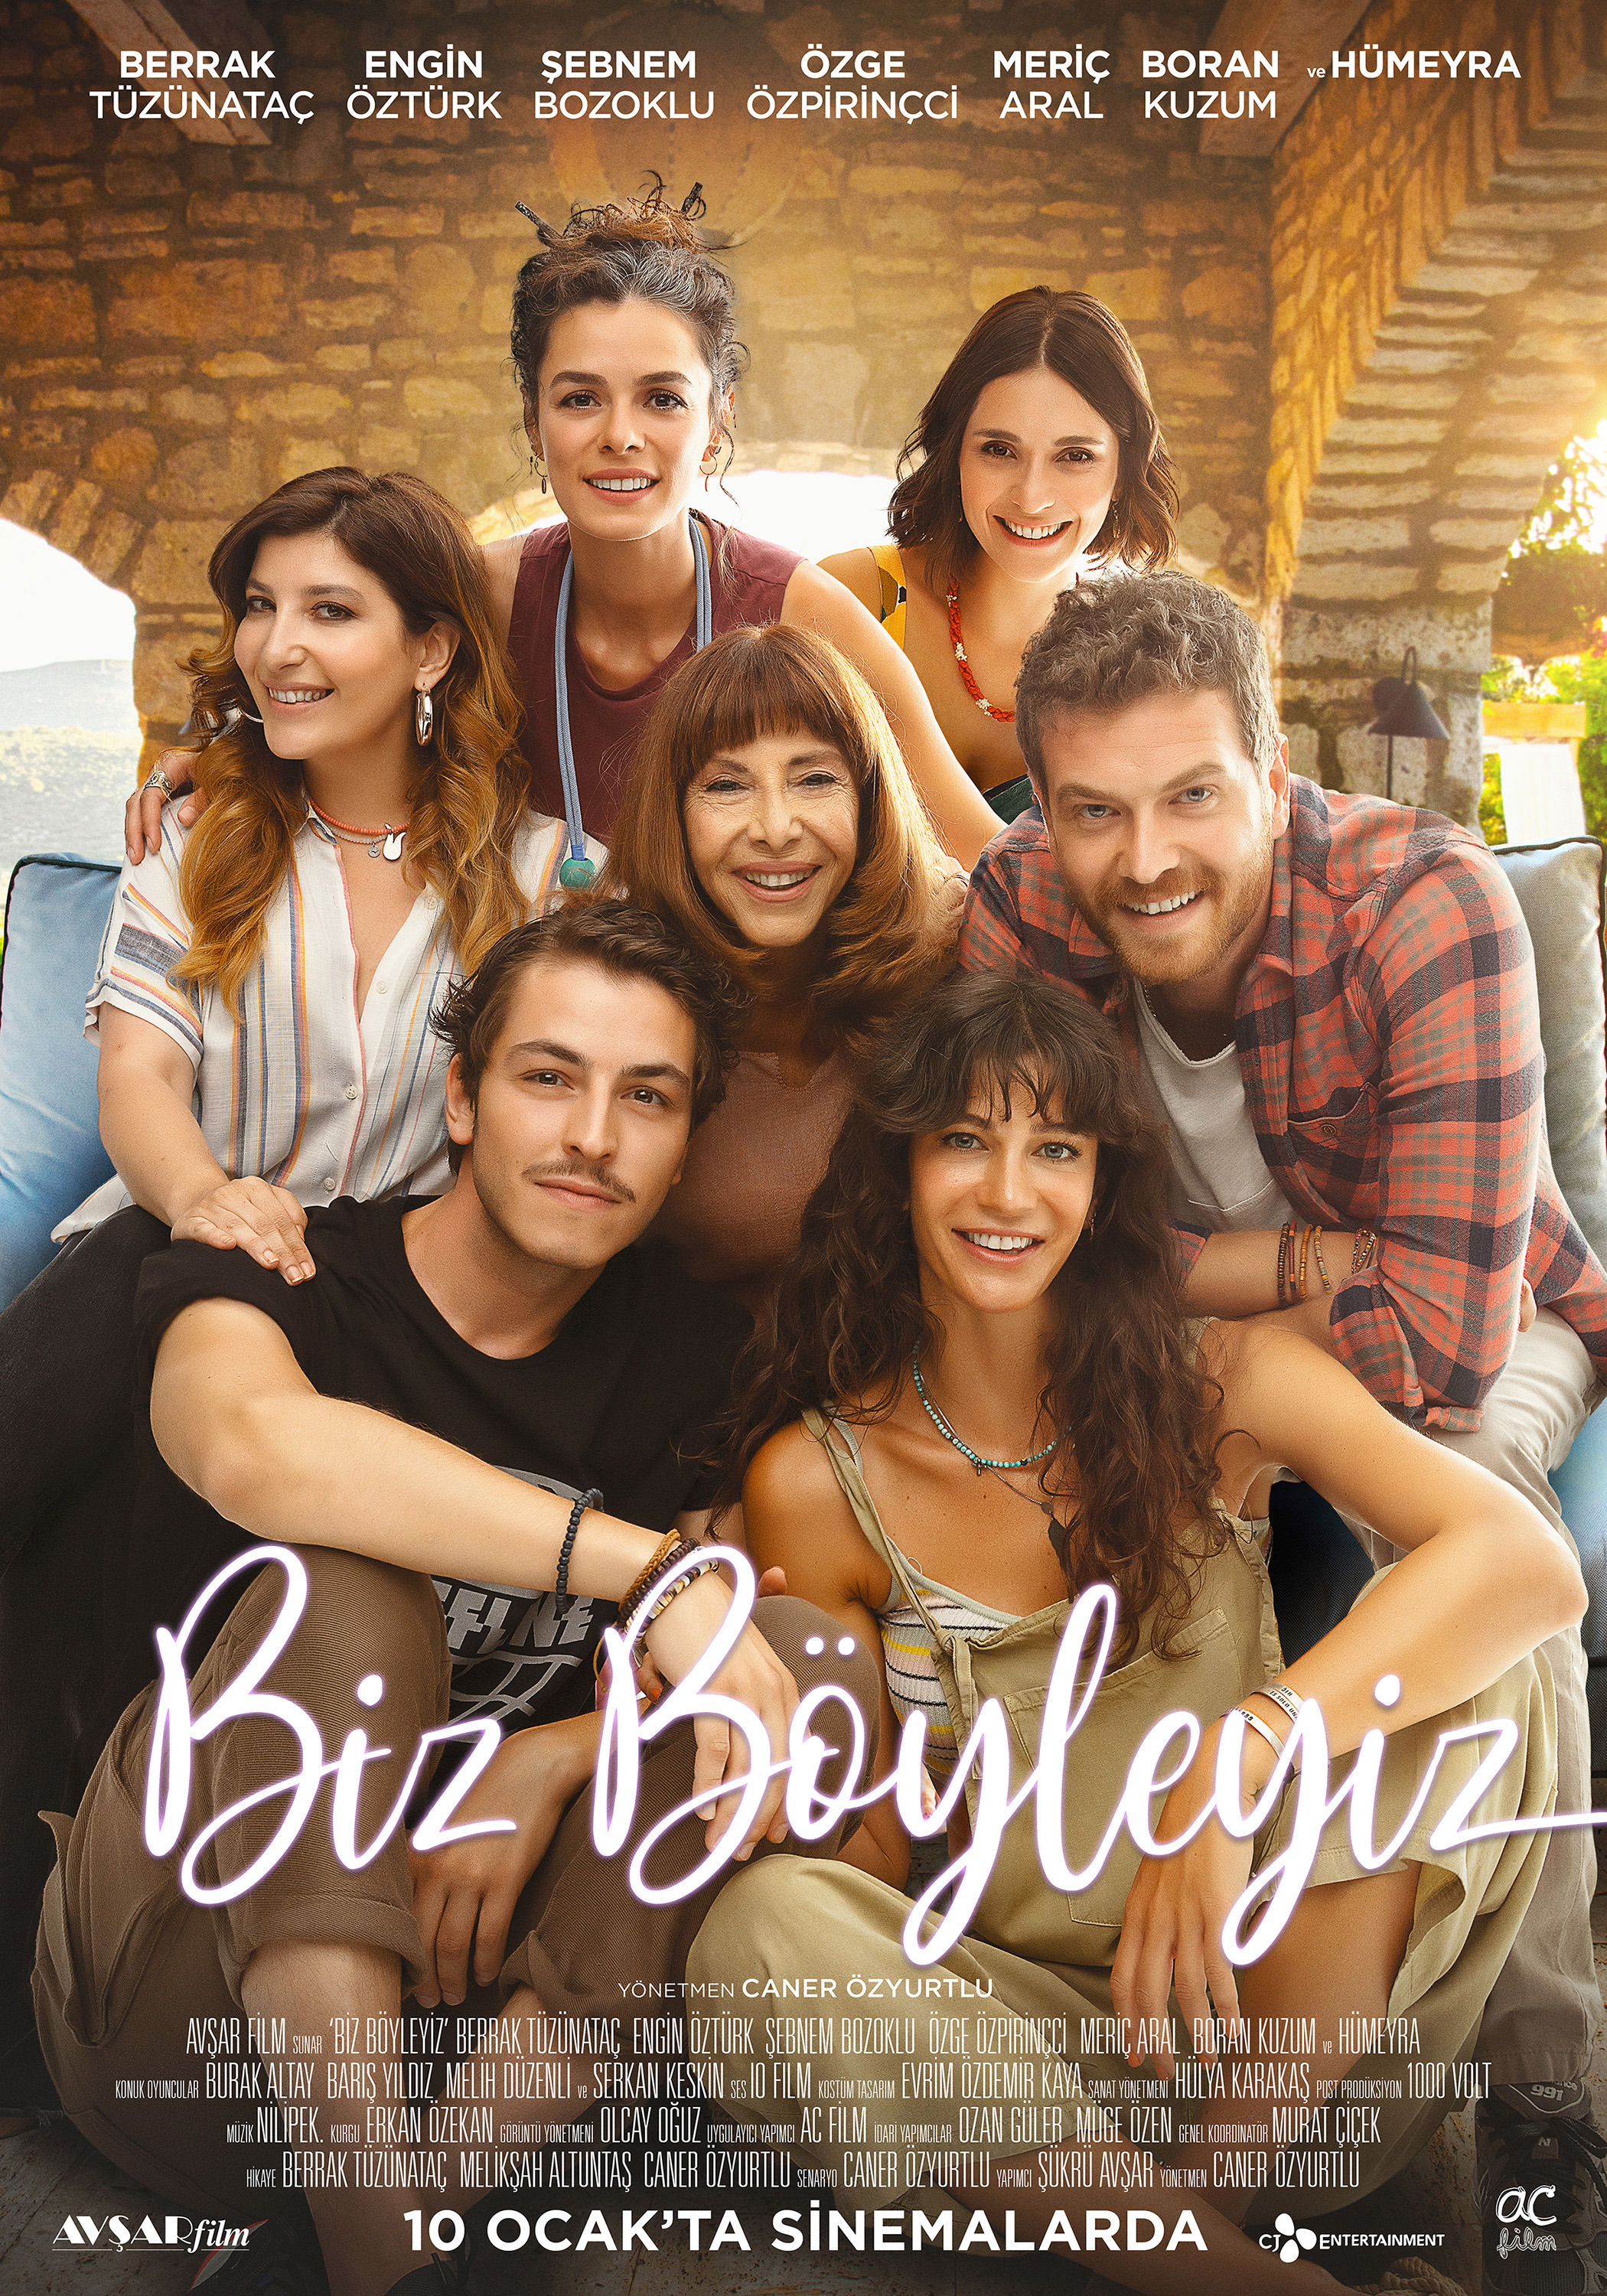 Mega Sized Movie Poster Image for Biz Böyleyiz (#2 of 2)